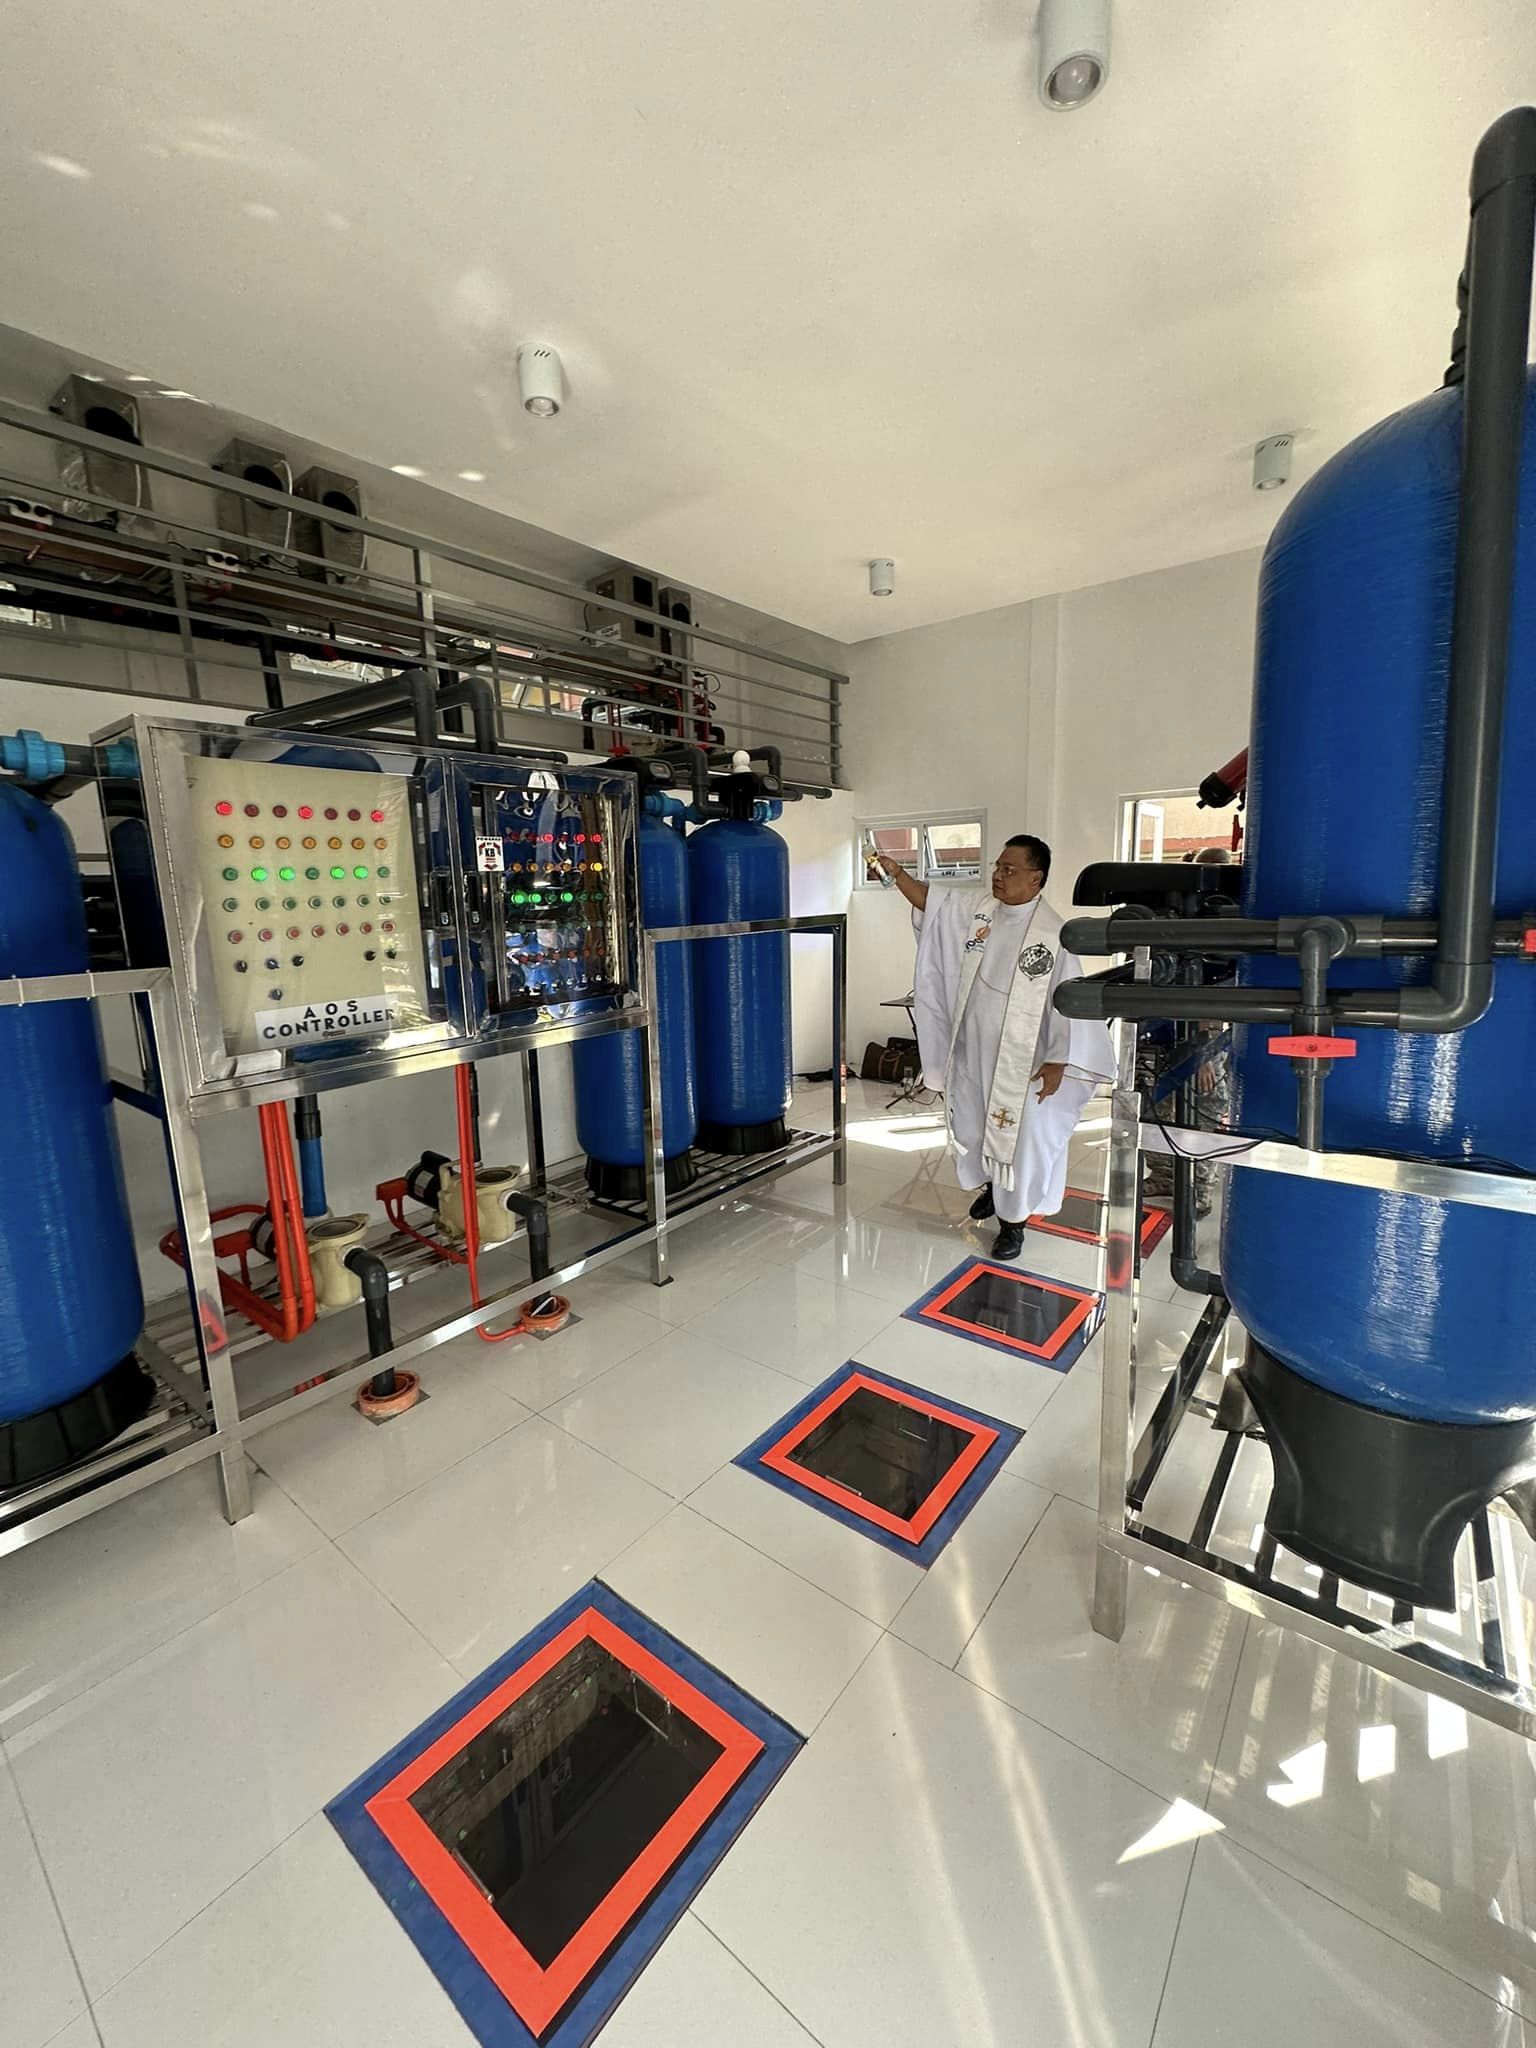 SLU Wastewater Treatment System Gets Upgraded to Latest Innovative Technology